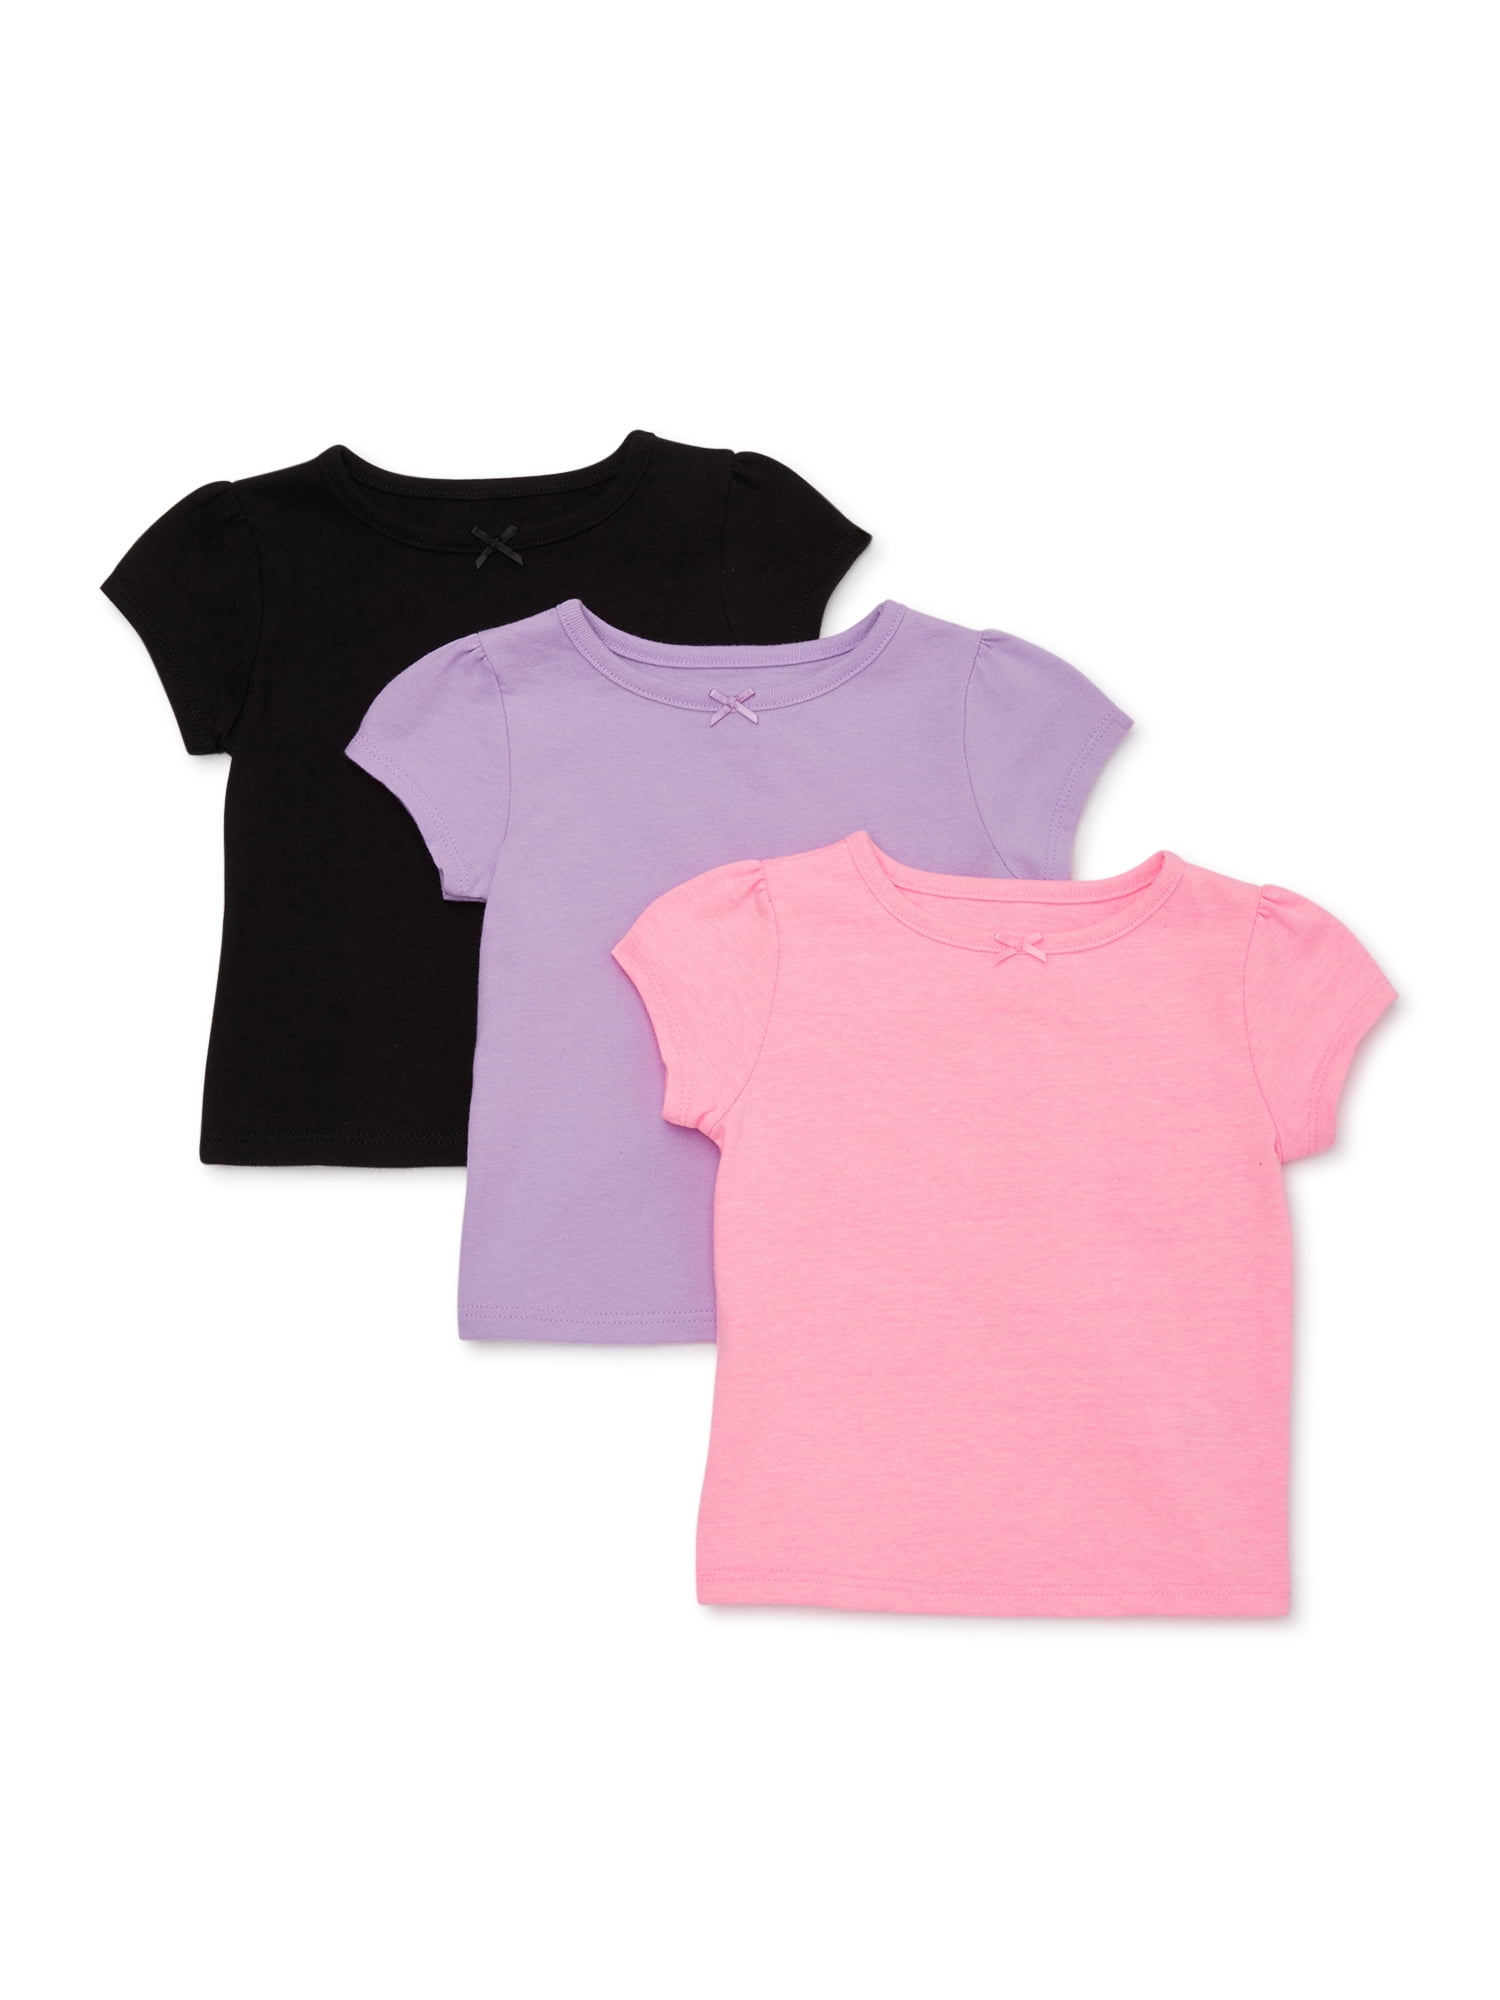 Washington DC Flag Toddler Baby Girls Cotton Ruffle Short Sleeve Top Basic T-Shirt 2-6T